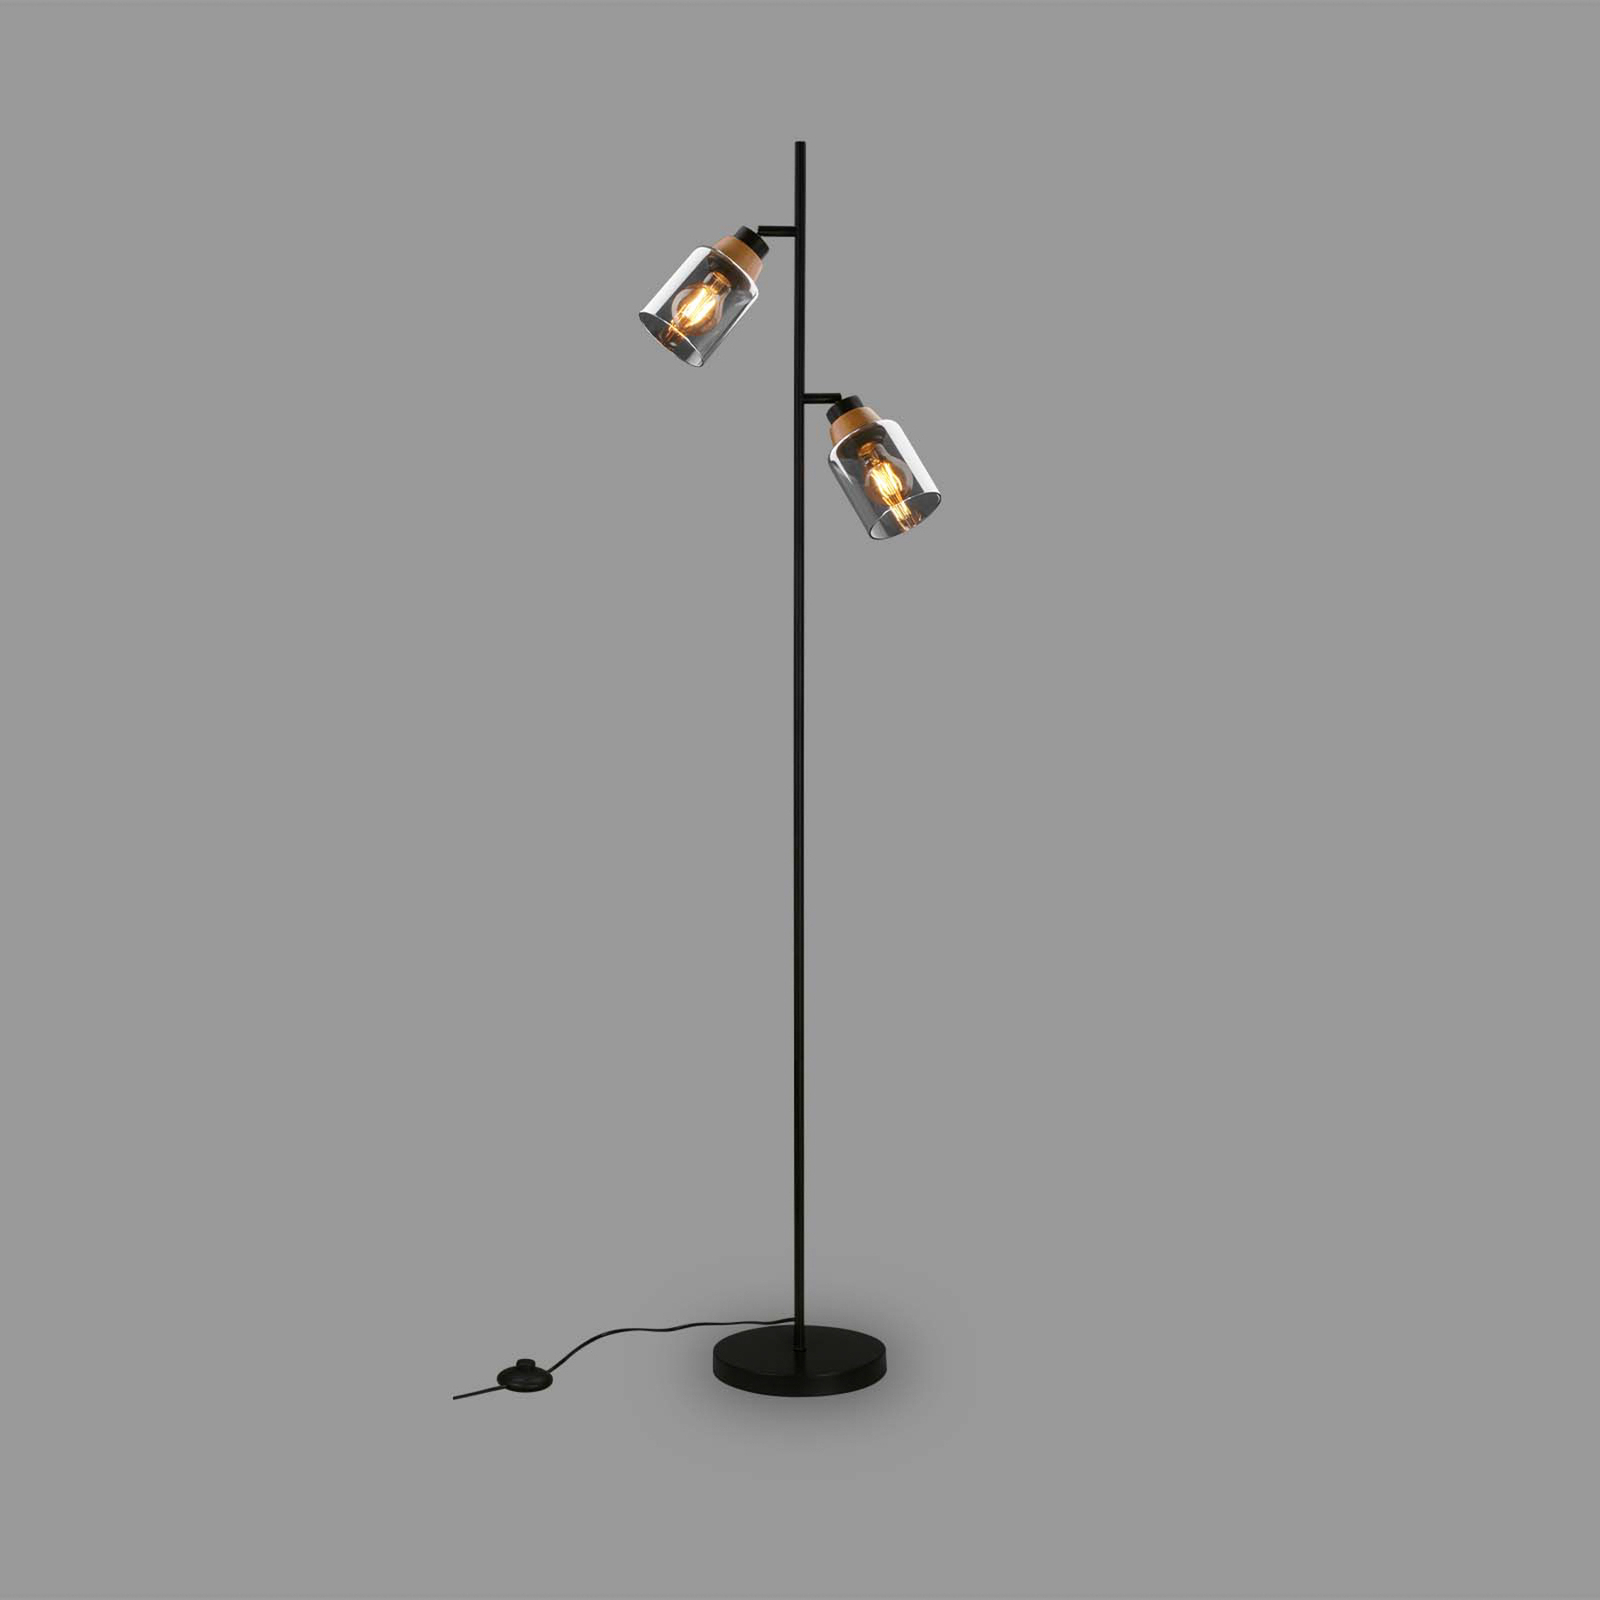 Vloerlamp 1486025 2-lamps, kappen rookglas